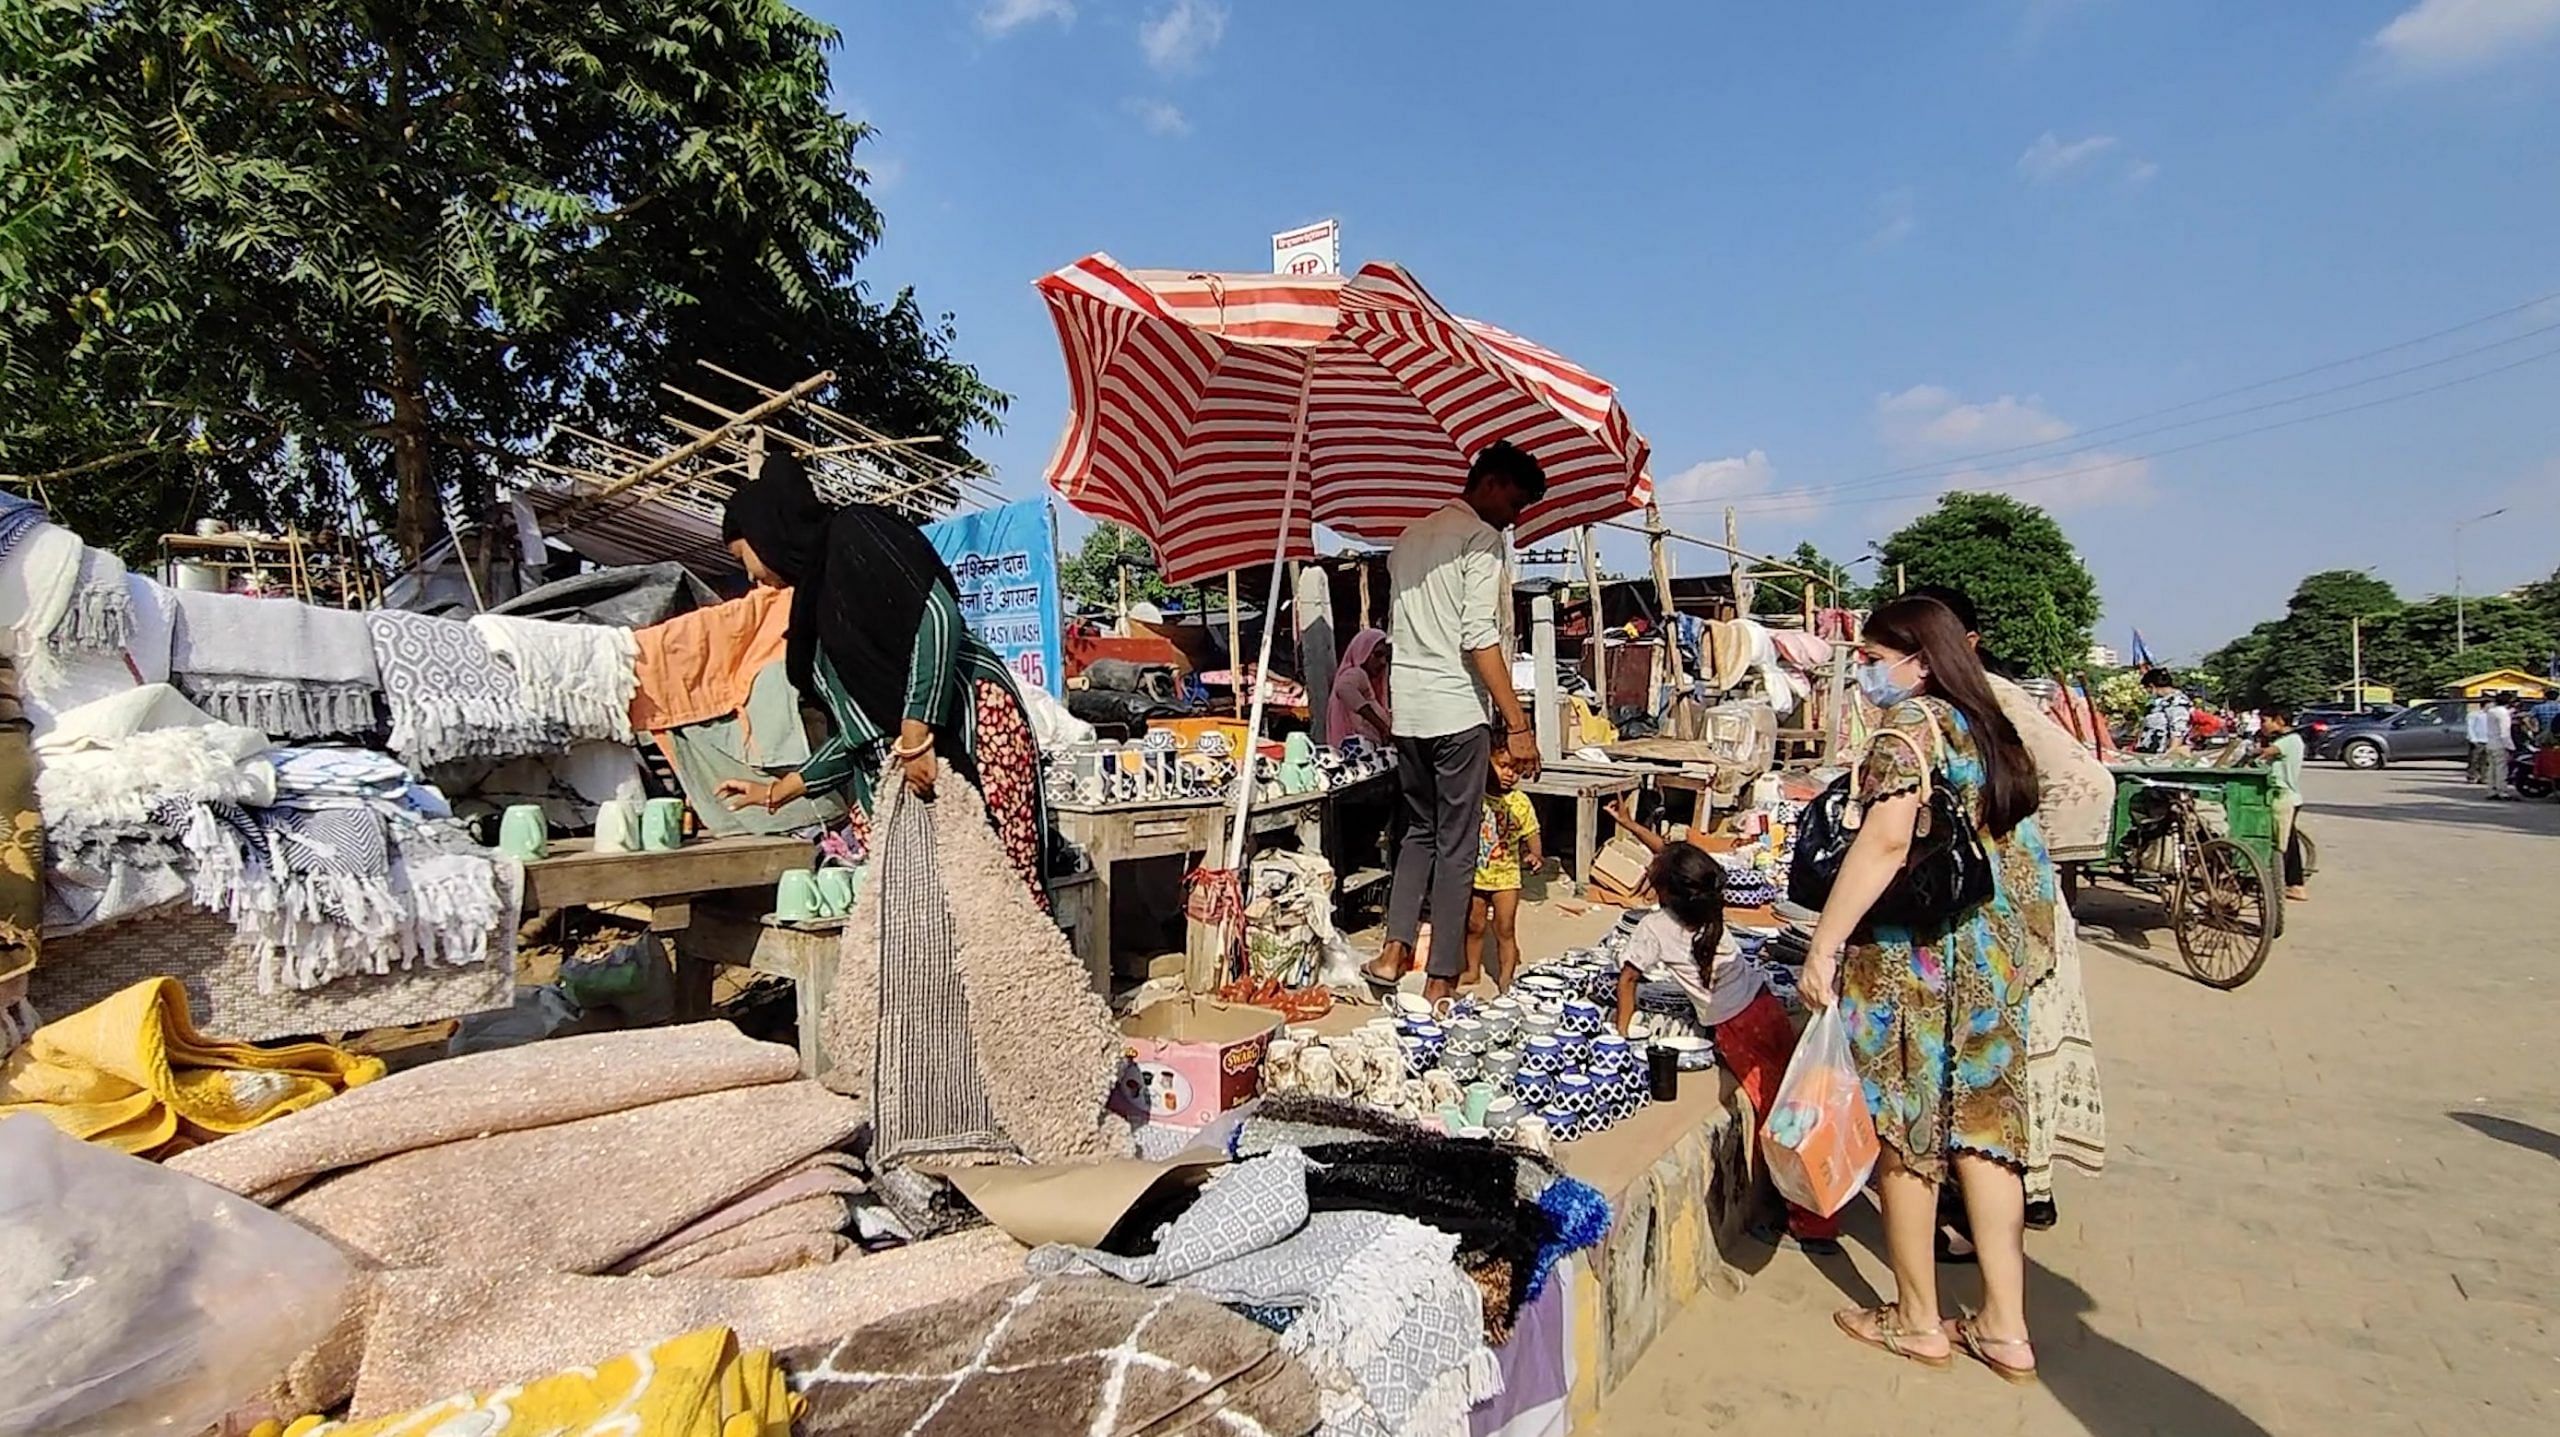 Customers looking to buy wares at Banjara market in Gurugram. | Photo: Reeti Agarwal